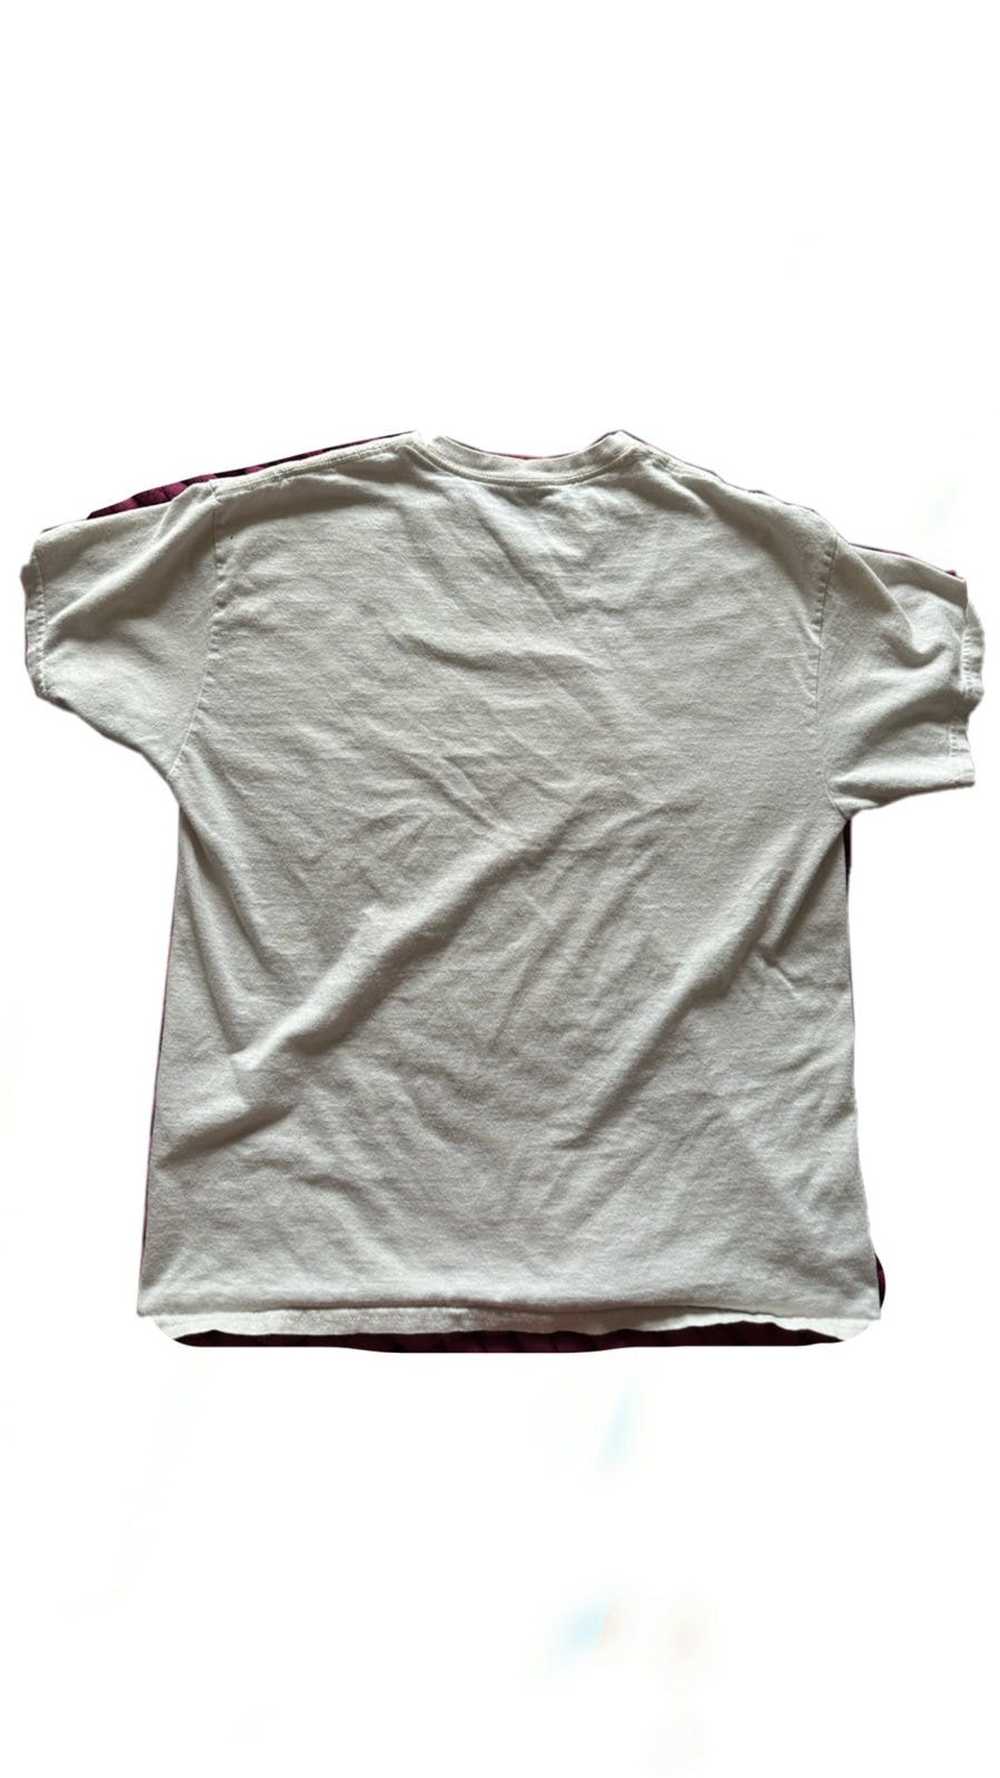 Band Tees × Streetwear Def Leppard Band T-shirt - image 2